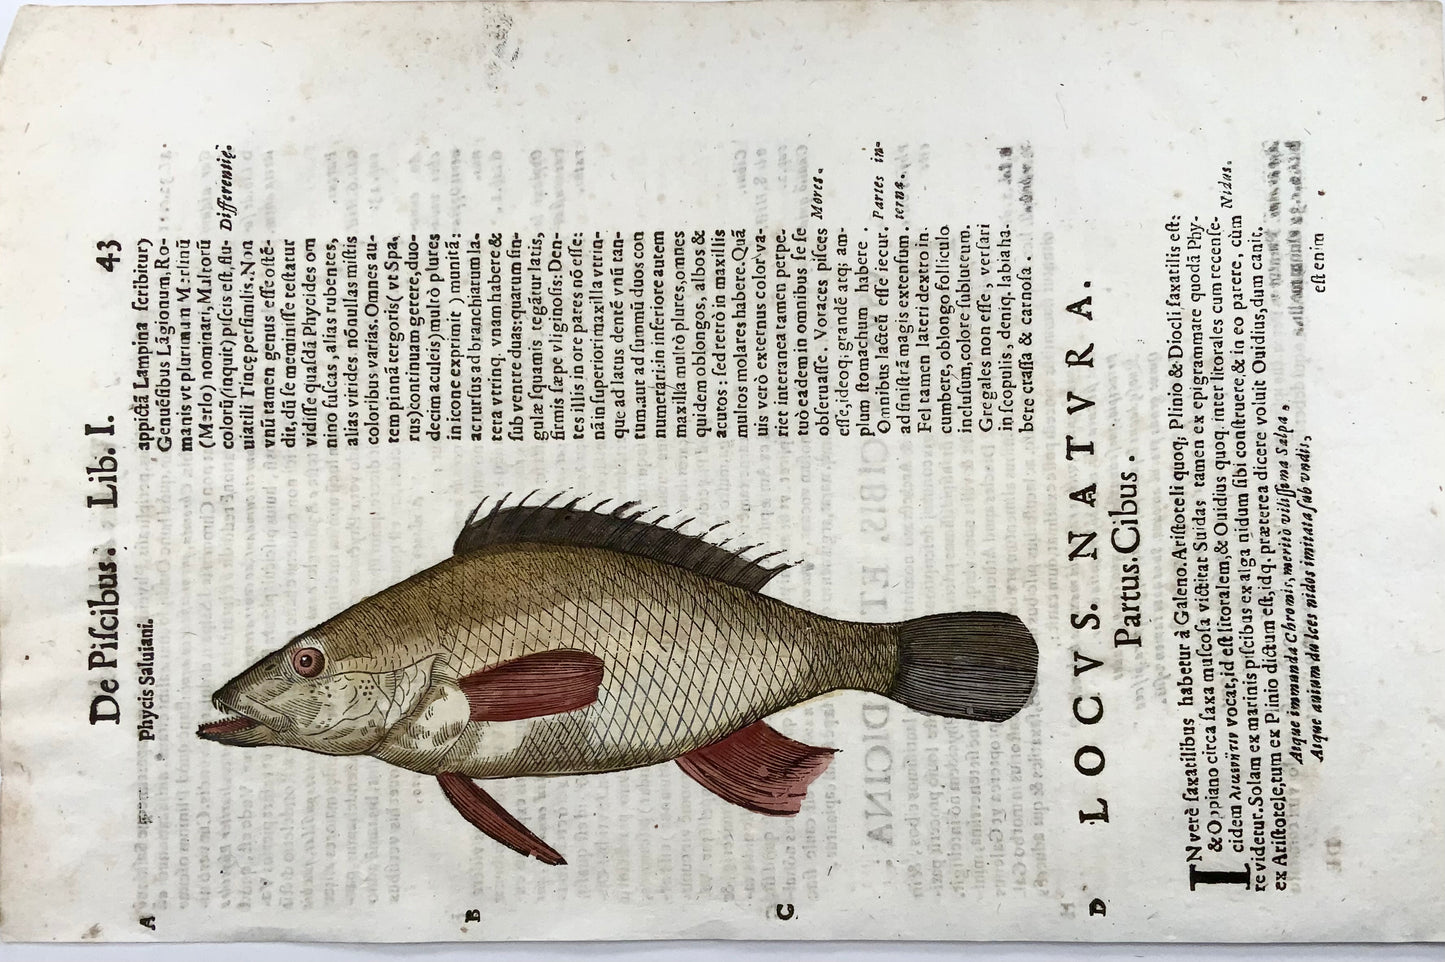 1638 Phylis Salviani, poisson Forkbeard, Aldrovandi, grande feuille gravée sur bois folio